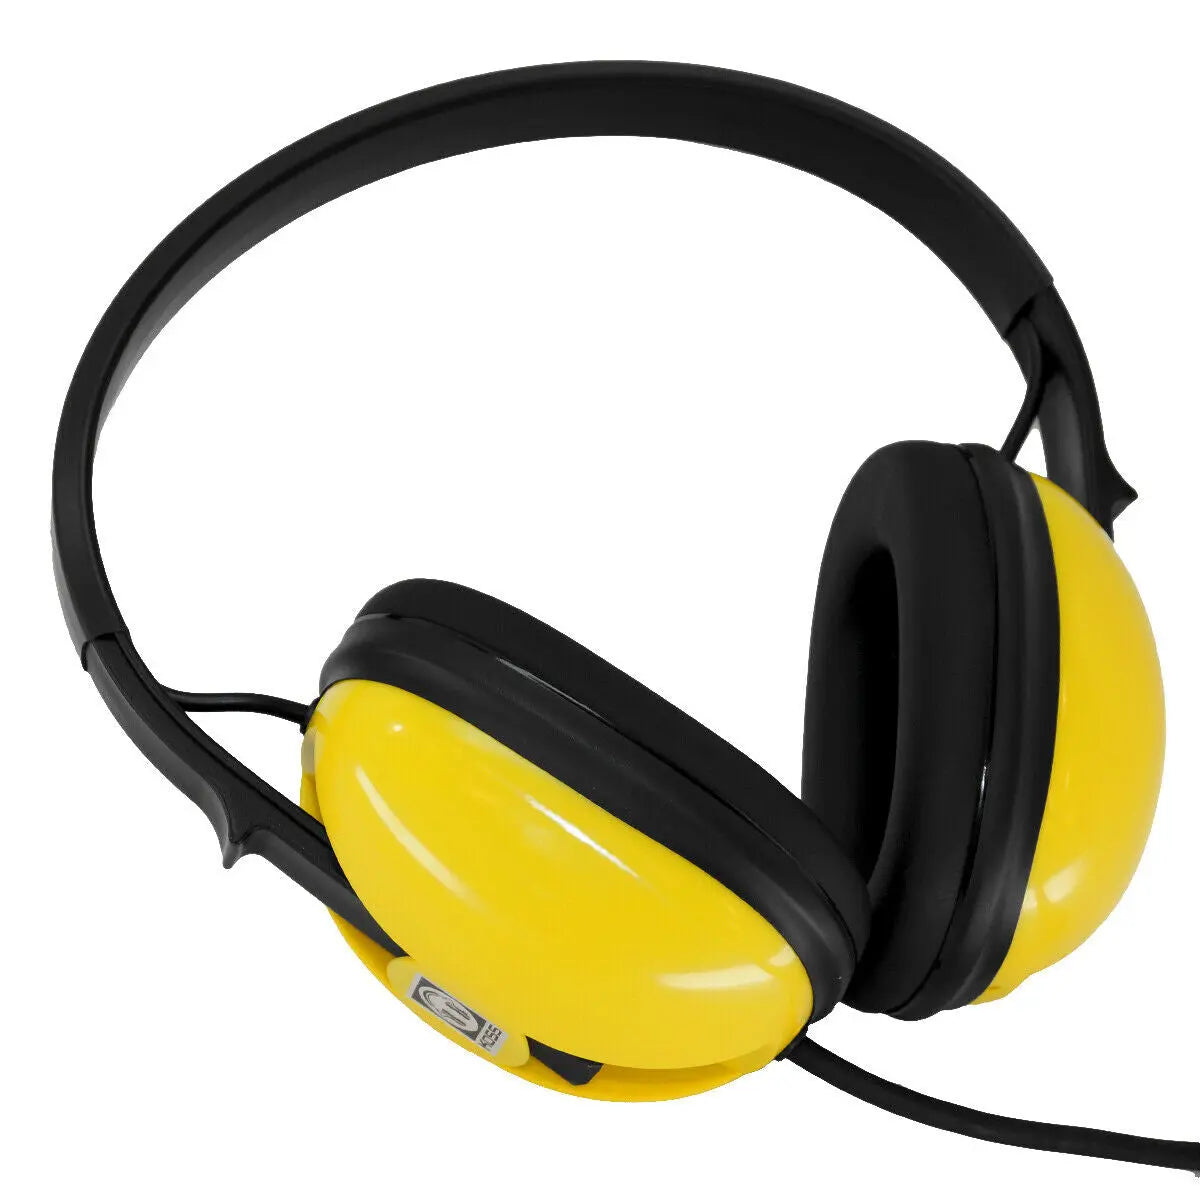 Minelab Waterproof Headphones for CTX 3030 Minelab